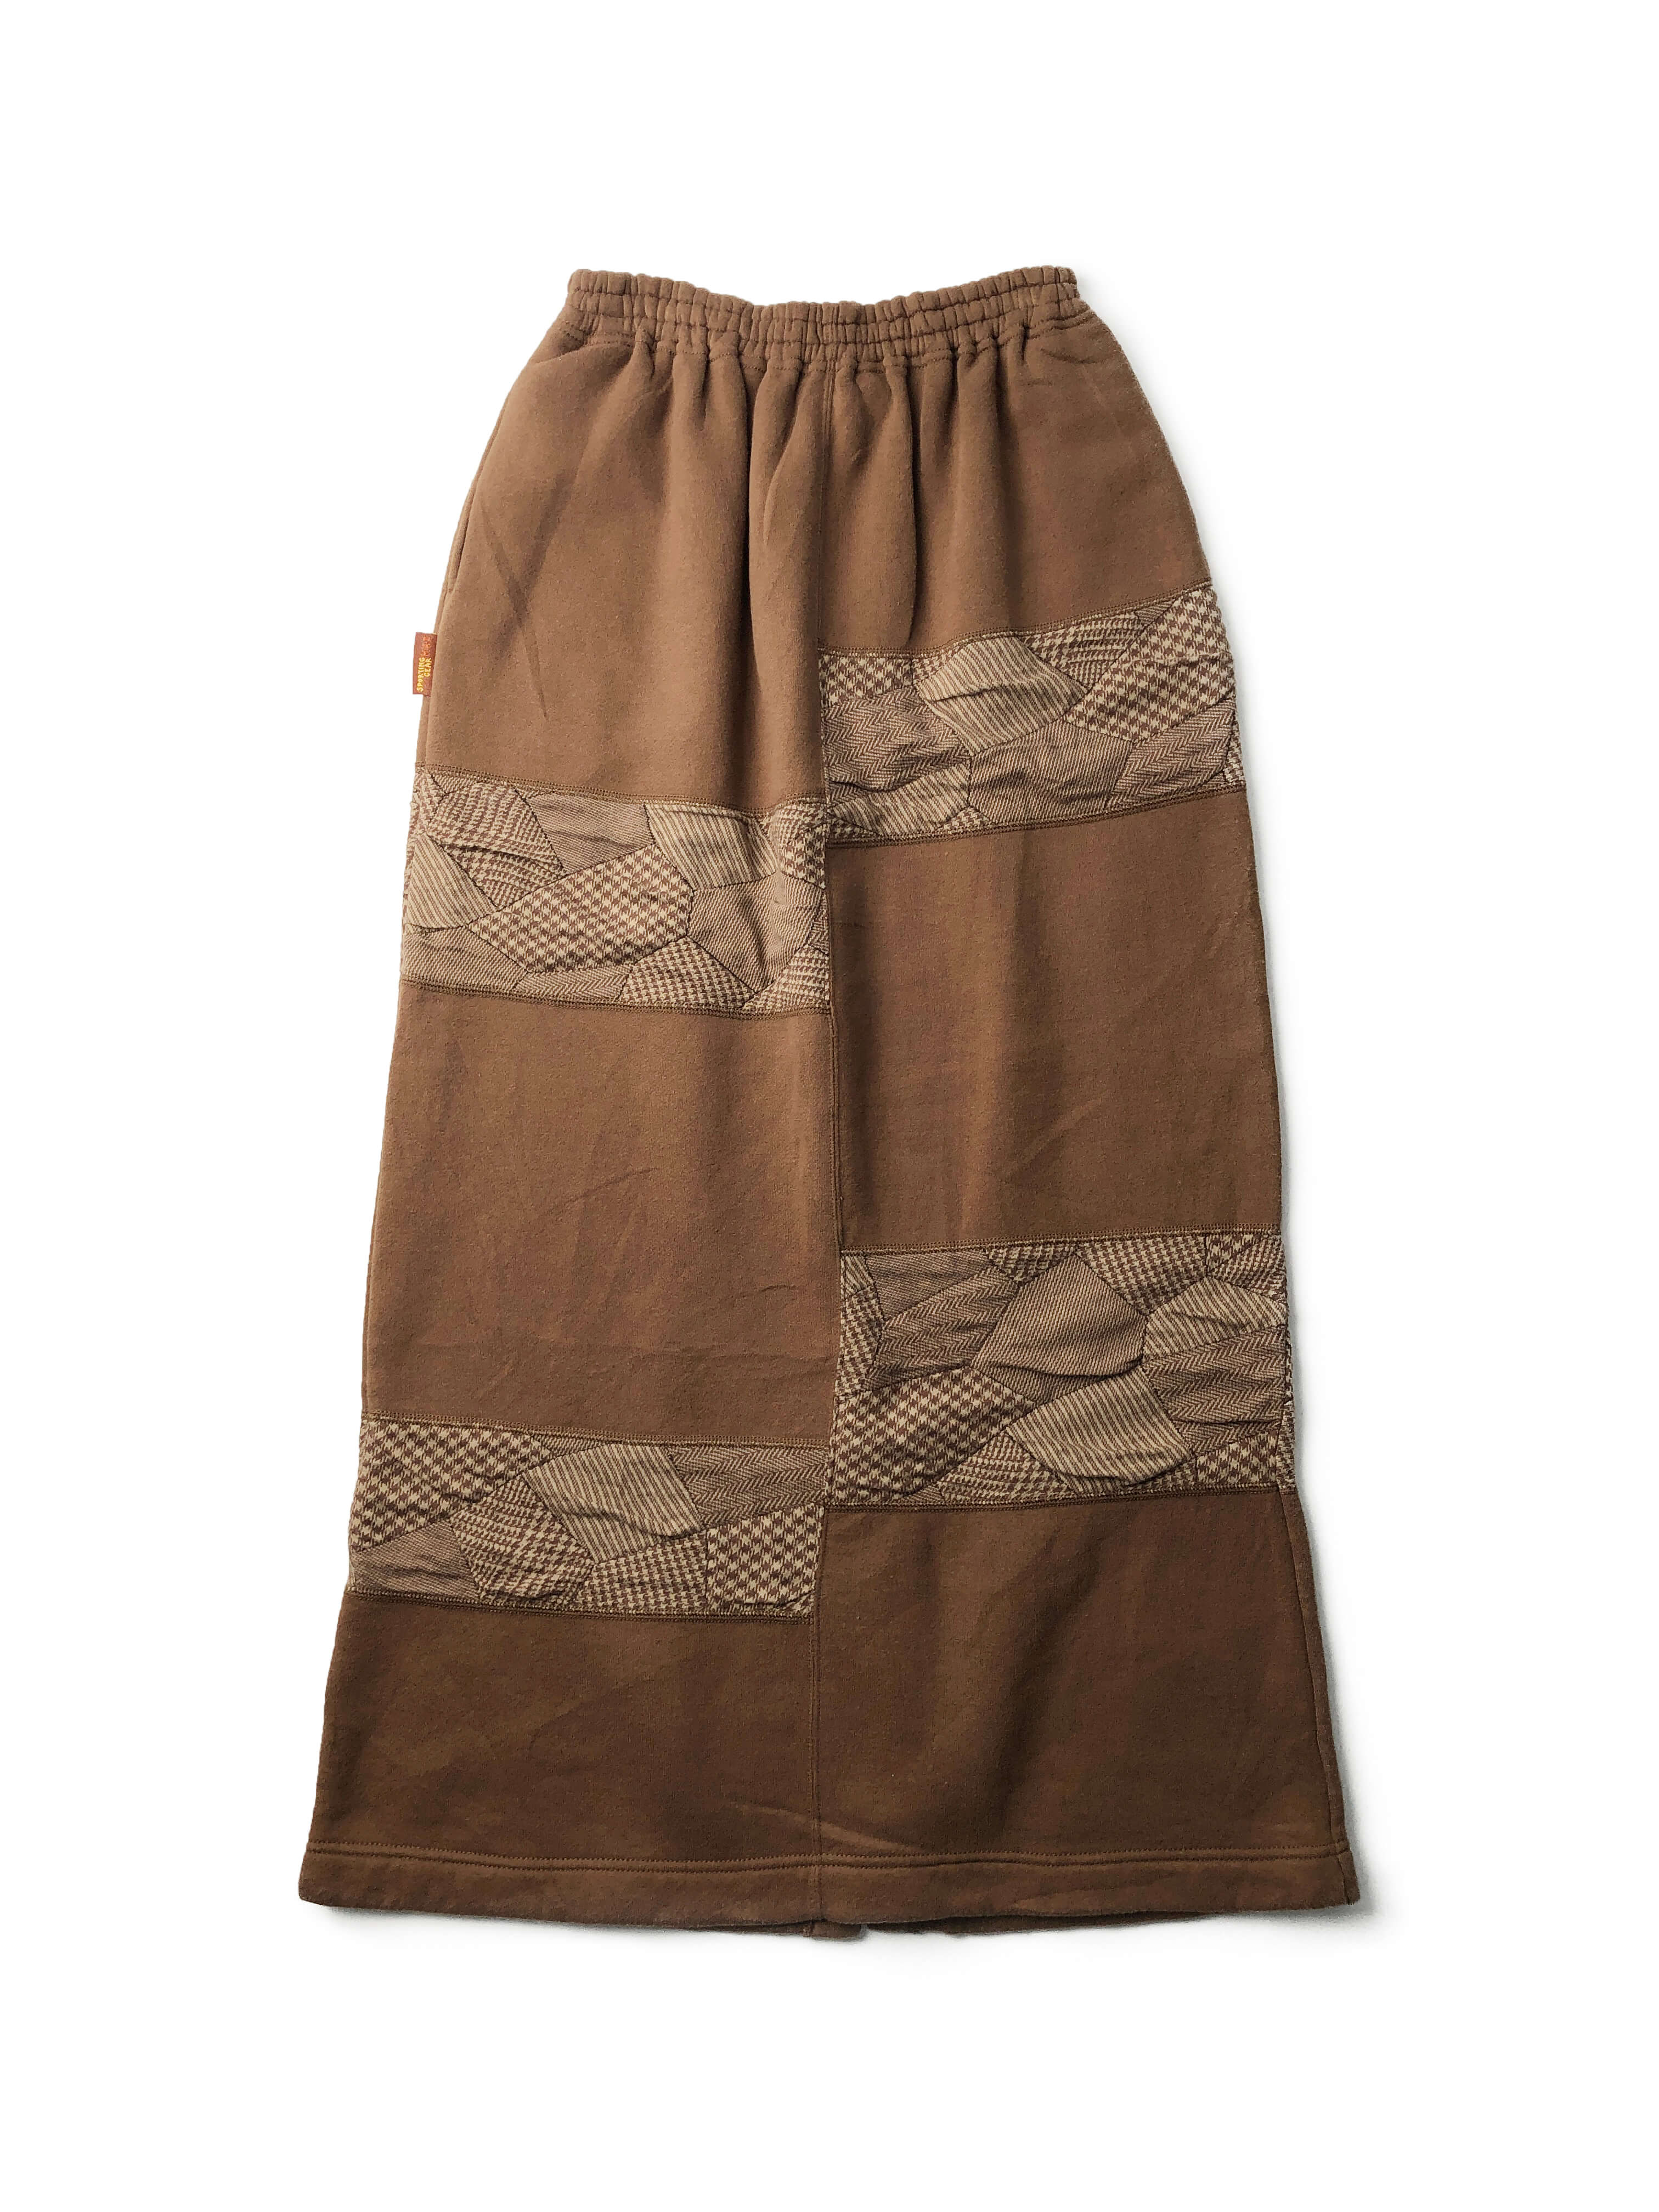 HAI SPROTING GEAR 90s mixed textile skirt